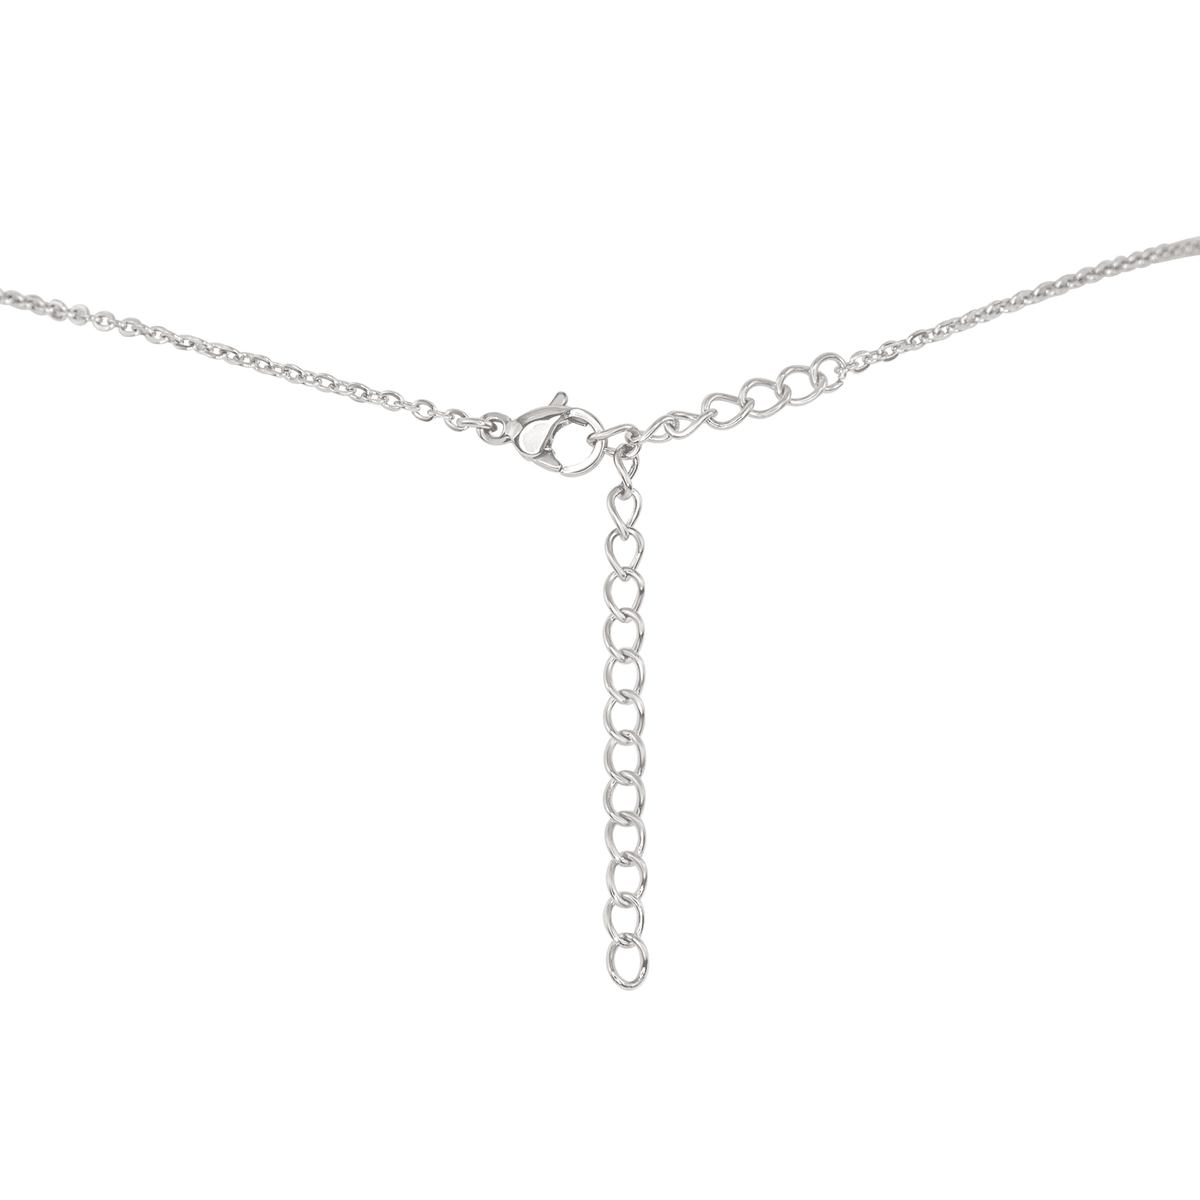 Prehnite Chip Bead Bar Necklace - Prehnite Chip Bead Bar Necklace - 14k Gold Fill - Luna Tide Handmade Crystal Jewellery